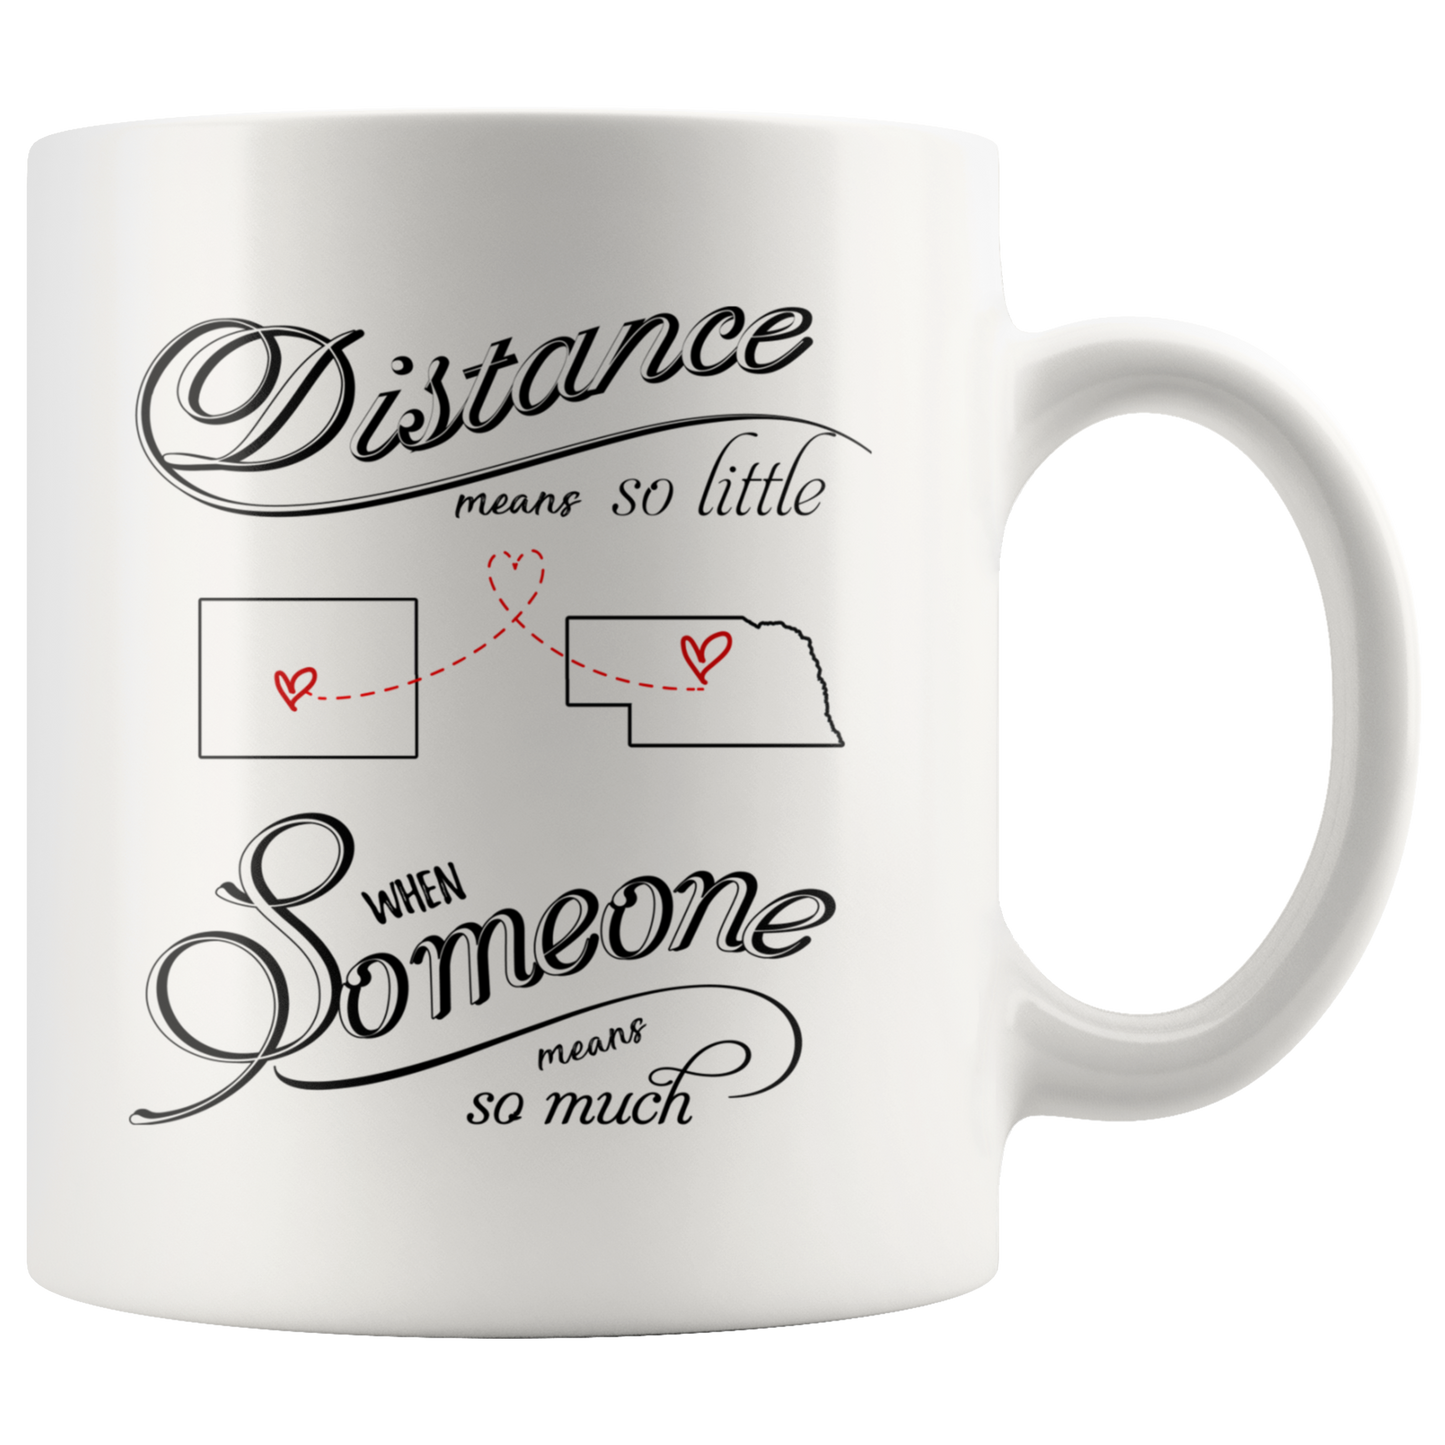 M-20485337-sp-25432 - [ Colorado | Nebraska ] (mug_11oz_white) Mothers Day Coffee Mug Colorado Nebraska Distance Means So L